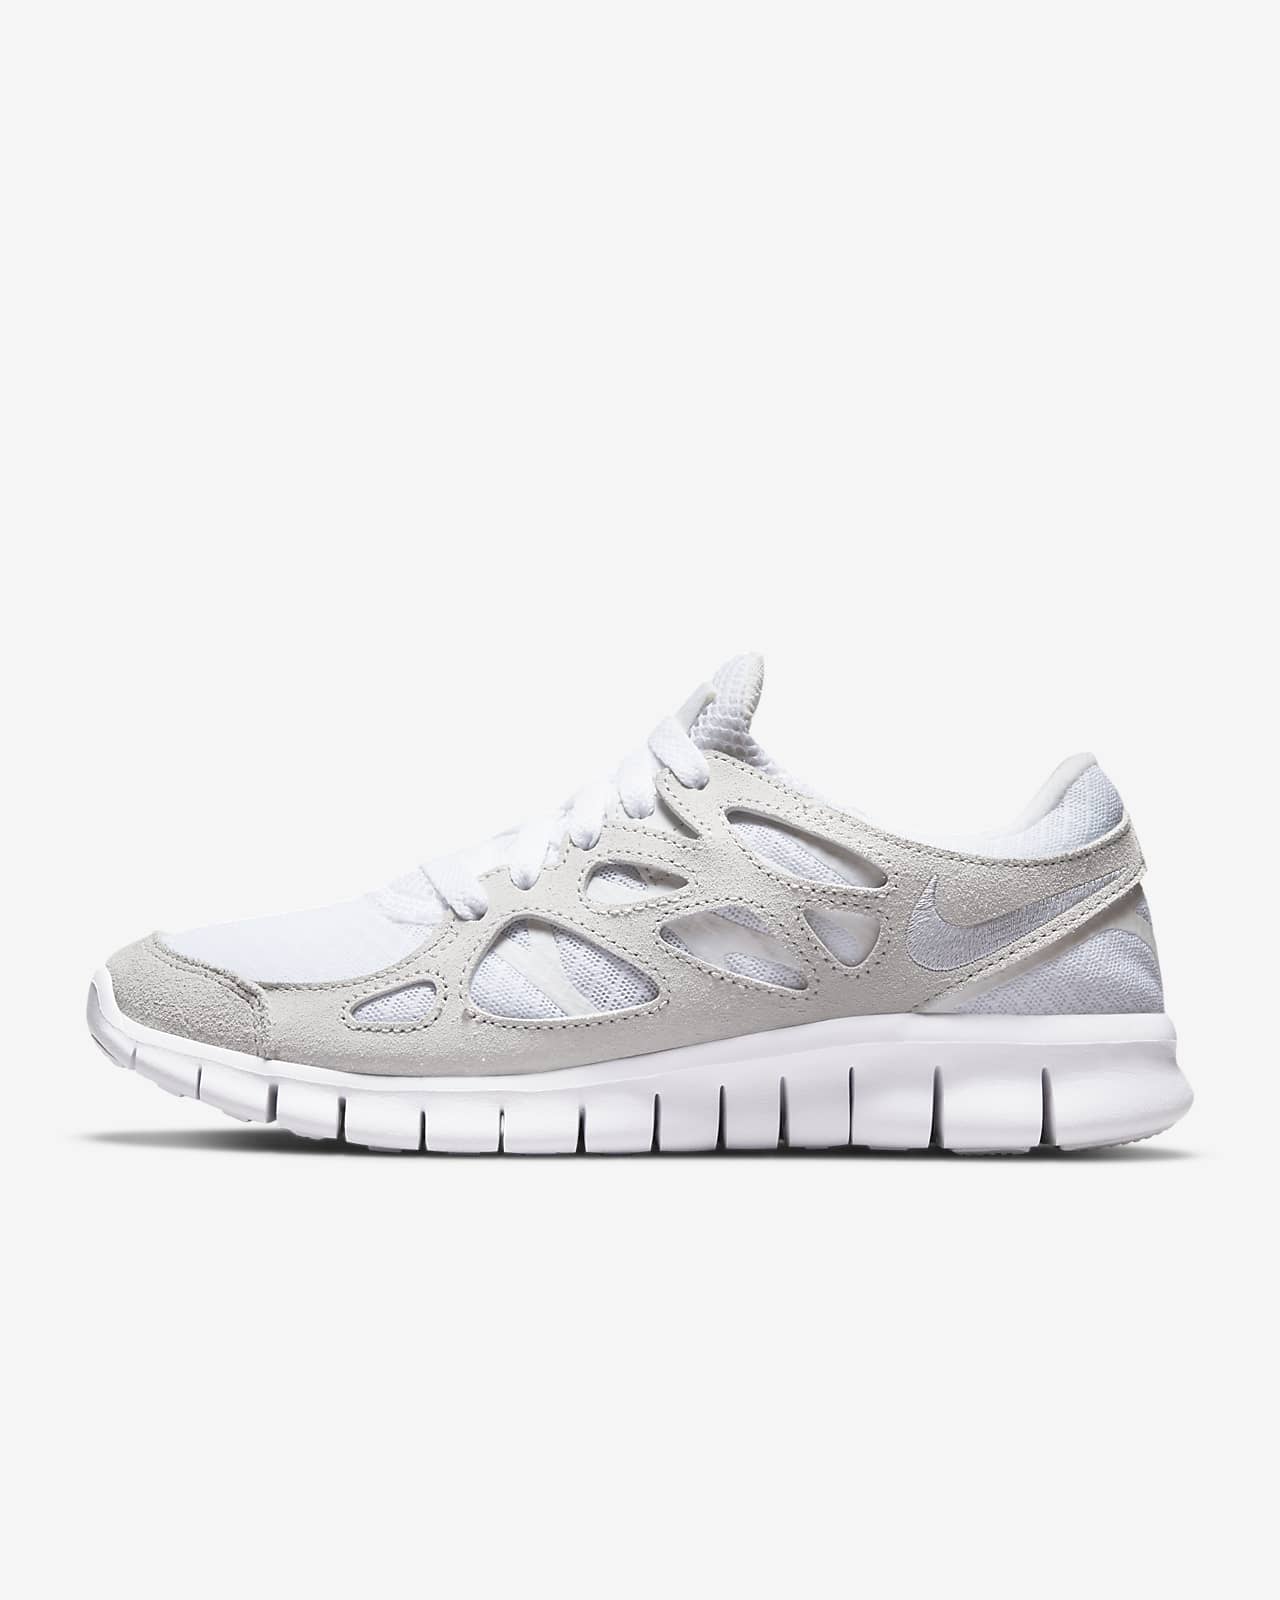 Nike Free Run 2 ‘Wolf Grey / White’ .97 Free Shipping